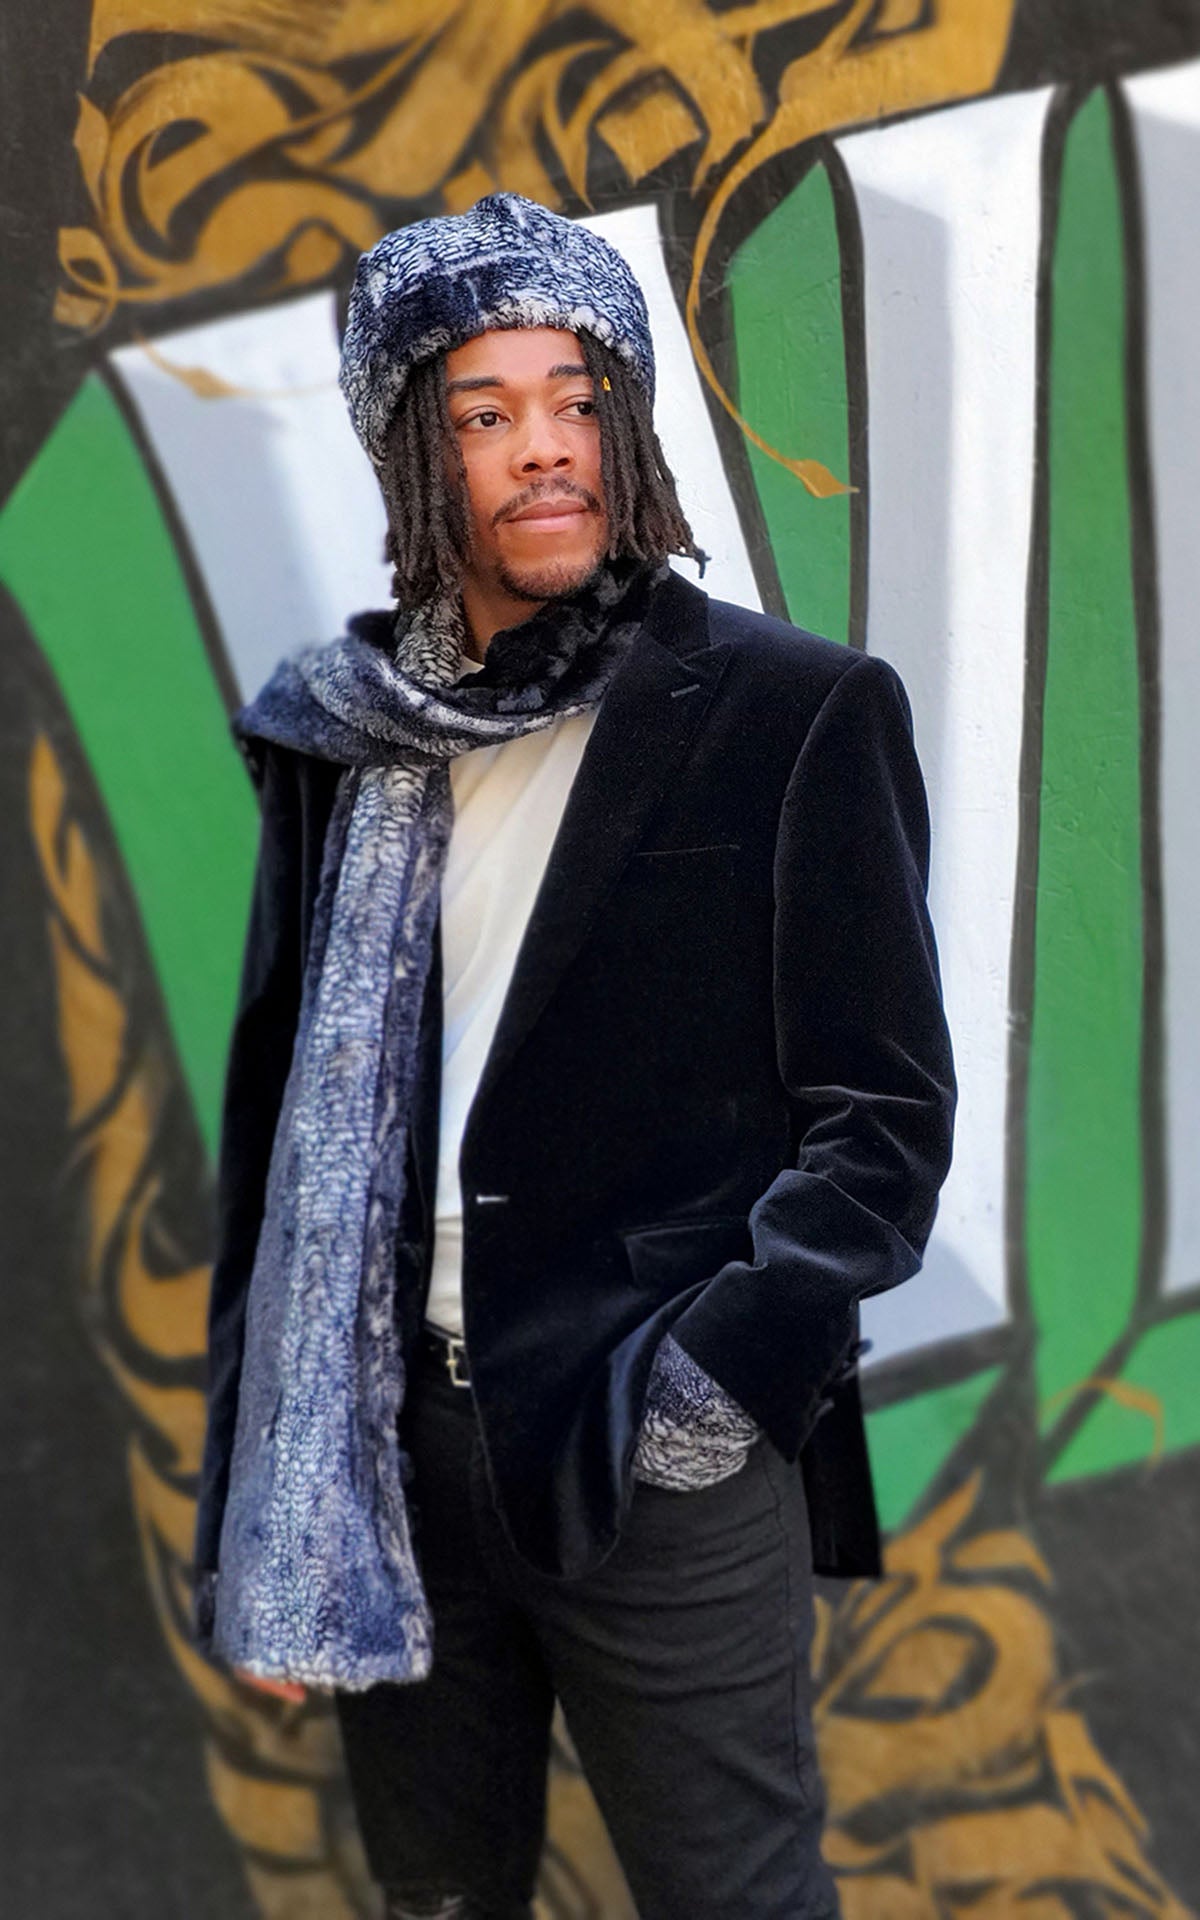  Male Model wearing beanie matching hat and  Classic Scarf against graffiti wall | Black Mamba animal snake print with Cuddly Black Faux Fur | Handmade by Pandemonium Millinery Seattle, WA USA